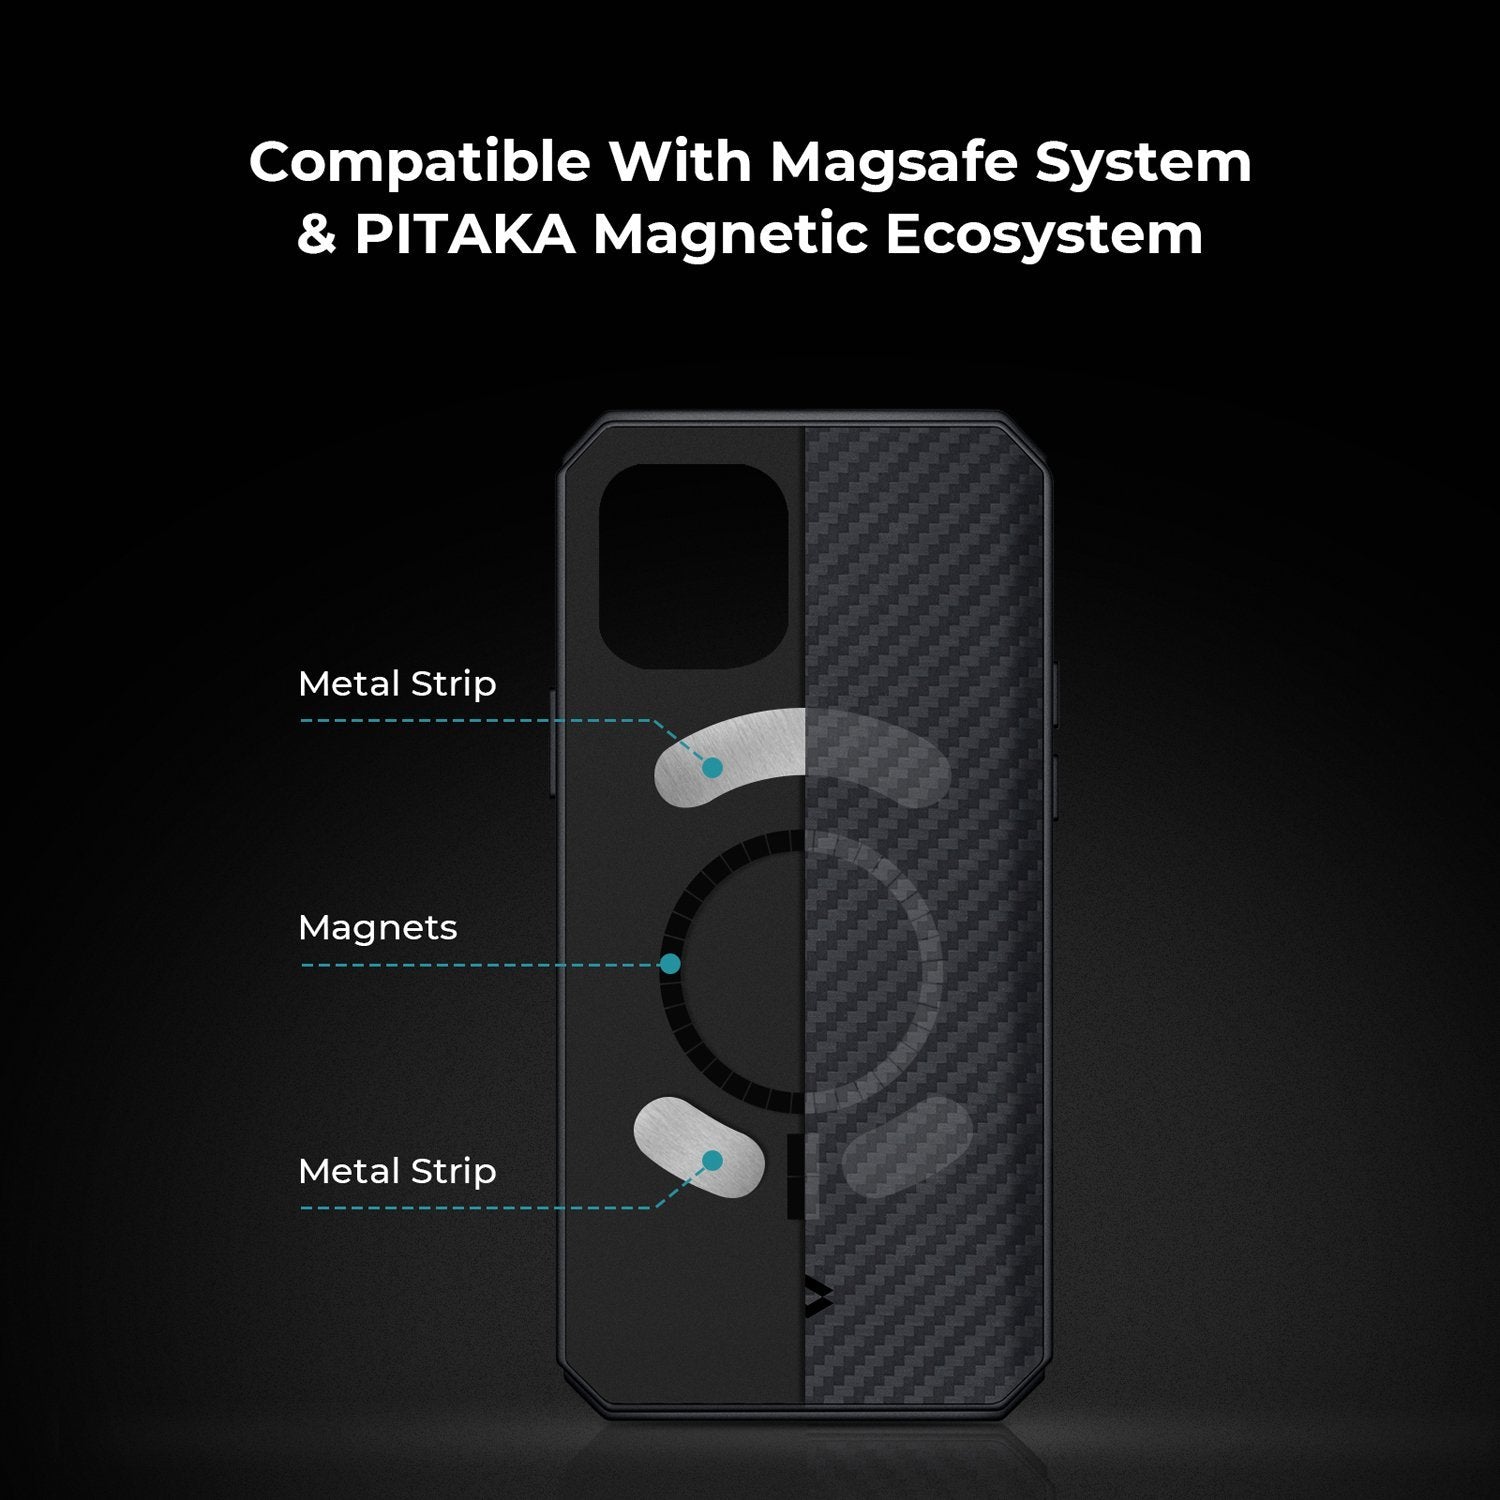 PITAKA Aramid Fiber MagEZ Case Pro 2 for iPhone 12 Pro Max 6.7"(Magsafe Compitable), Black/Grey Twill Default PITAKA 